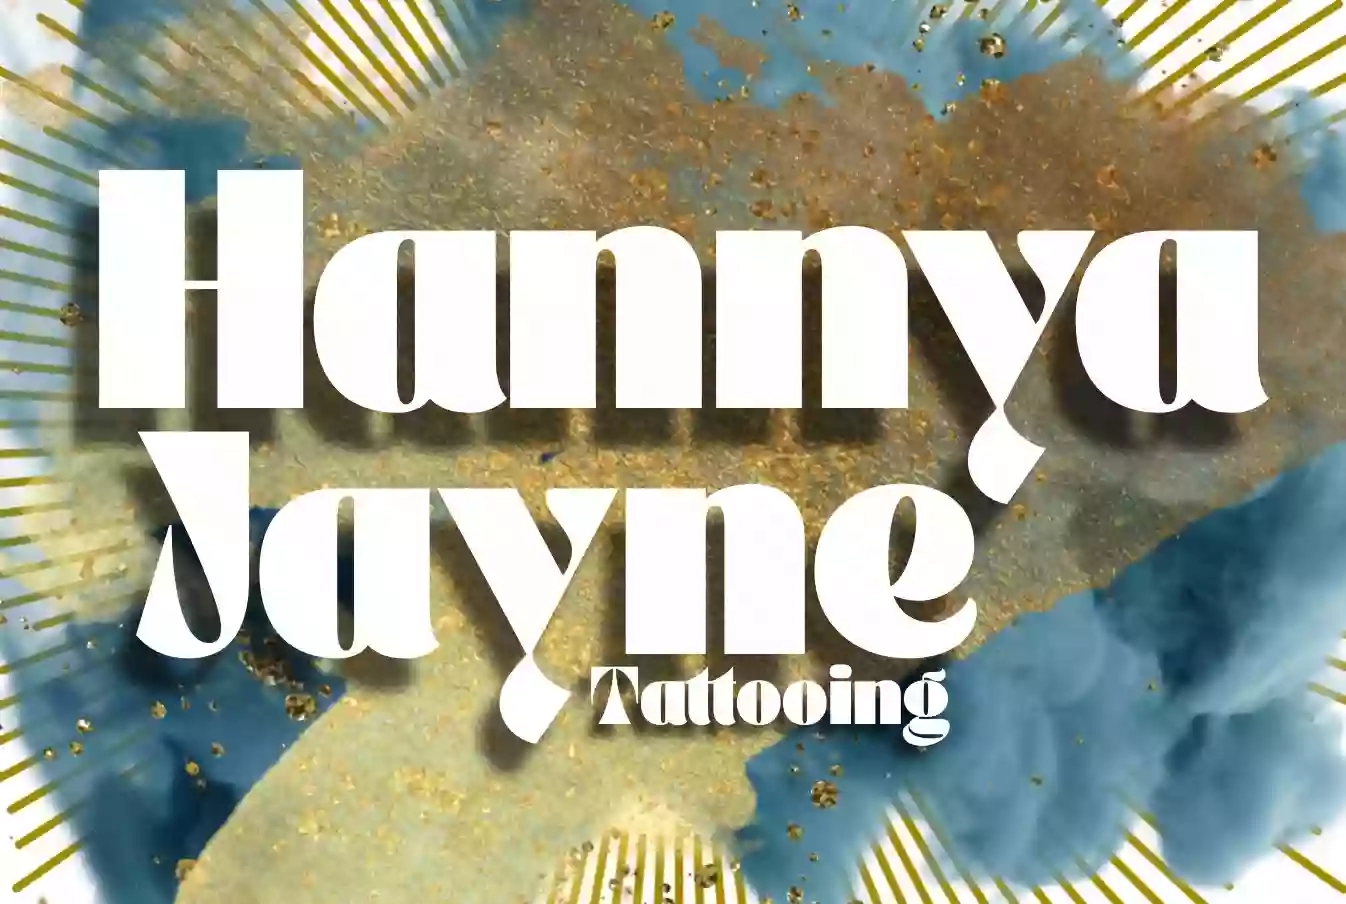 Hannya Jayne Tattooing